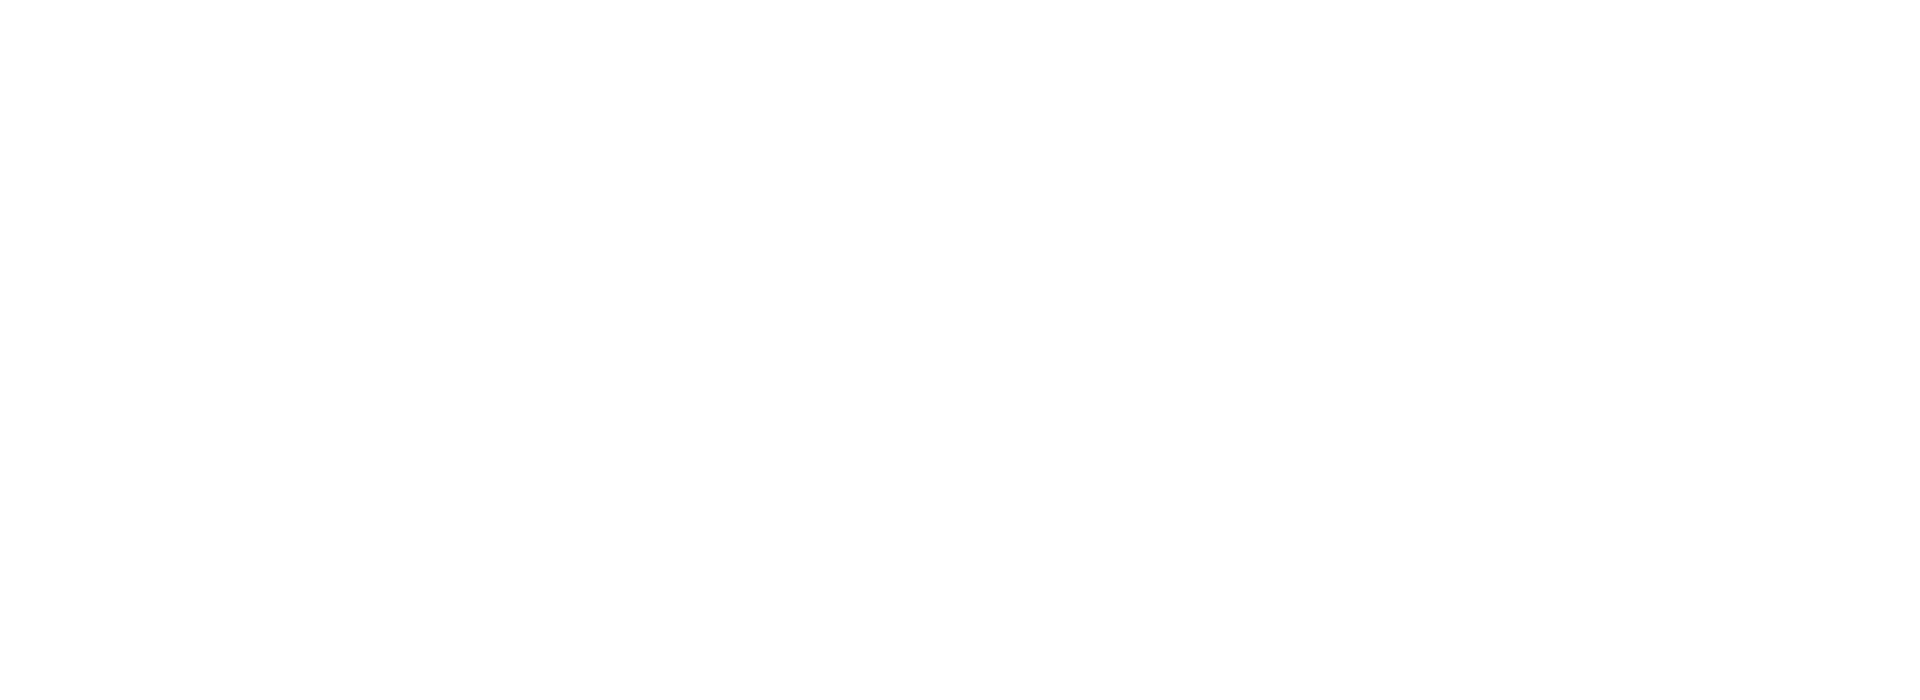  Plan de Recuperación, Transformación y Resilencia